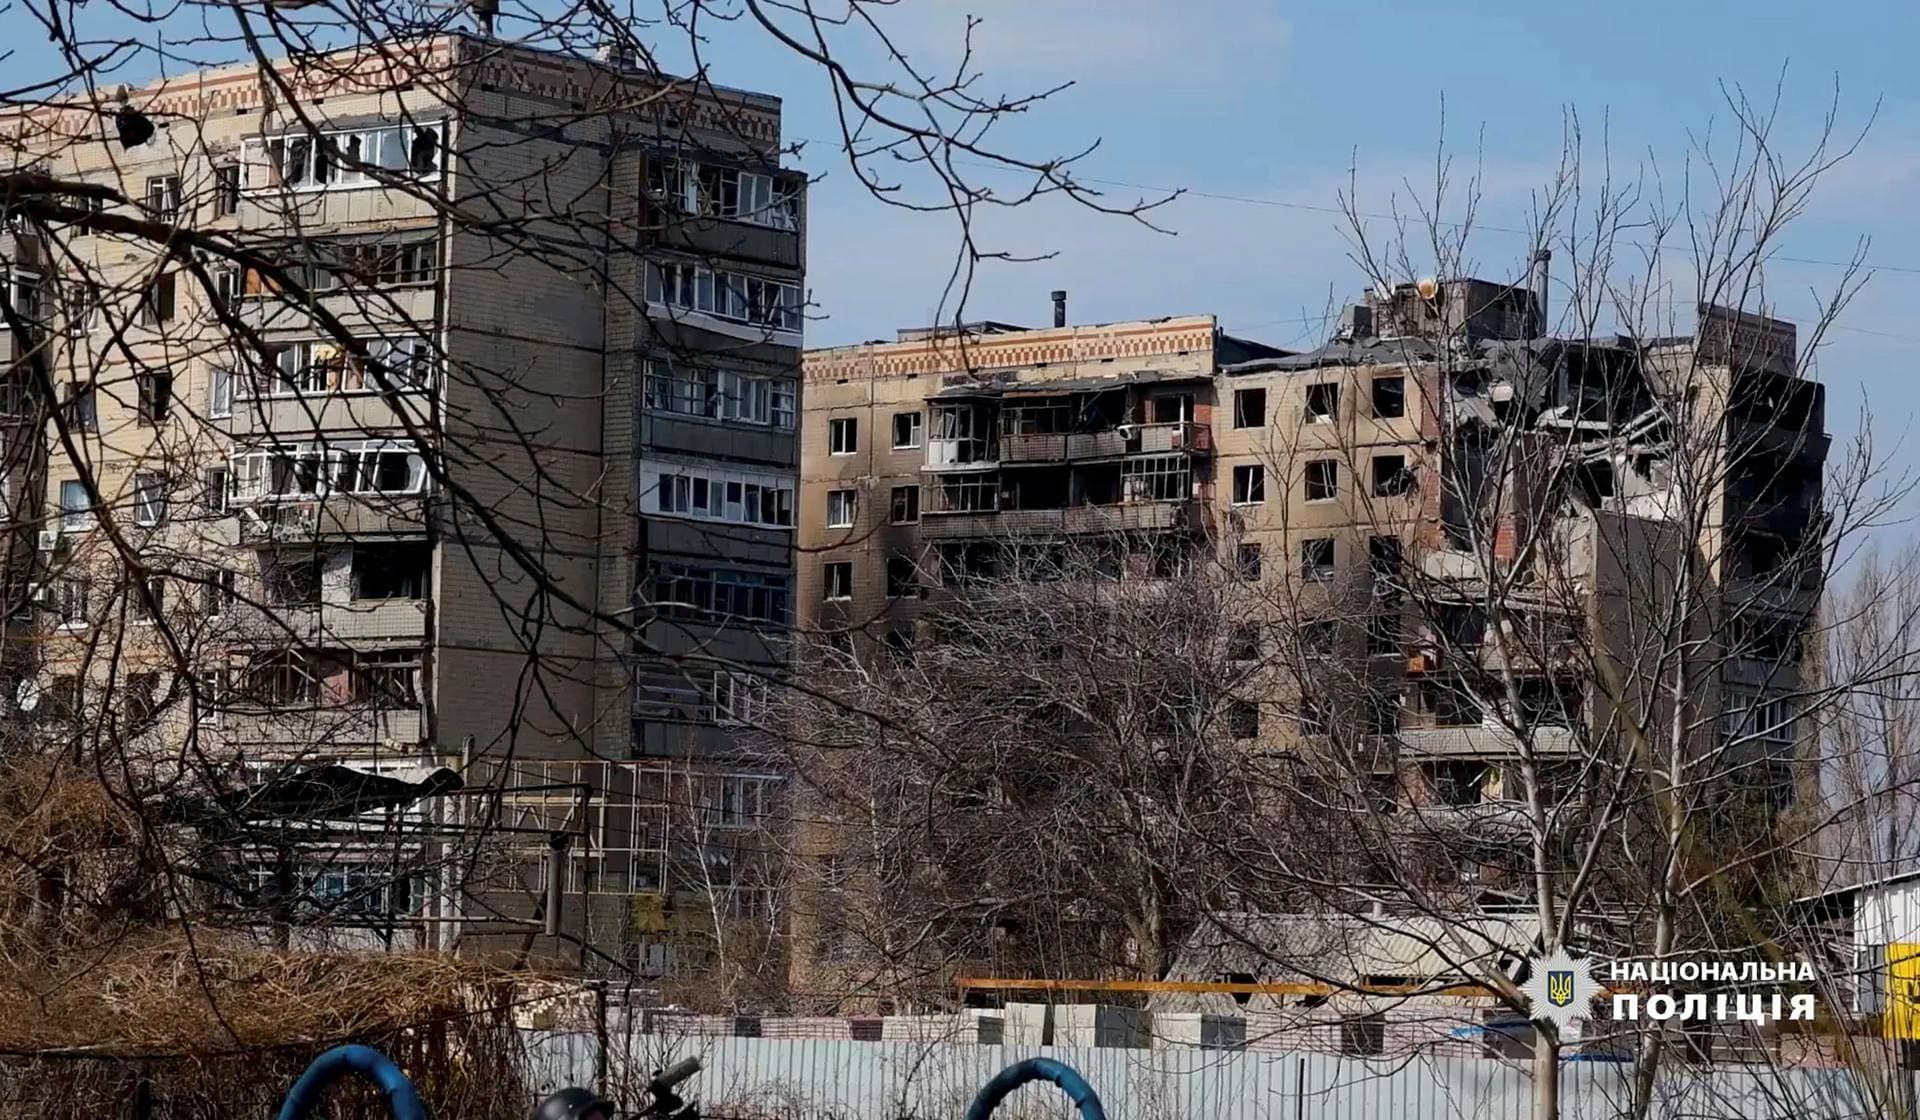 Damaged buildings in Avdiivka